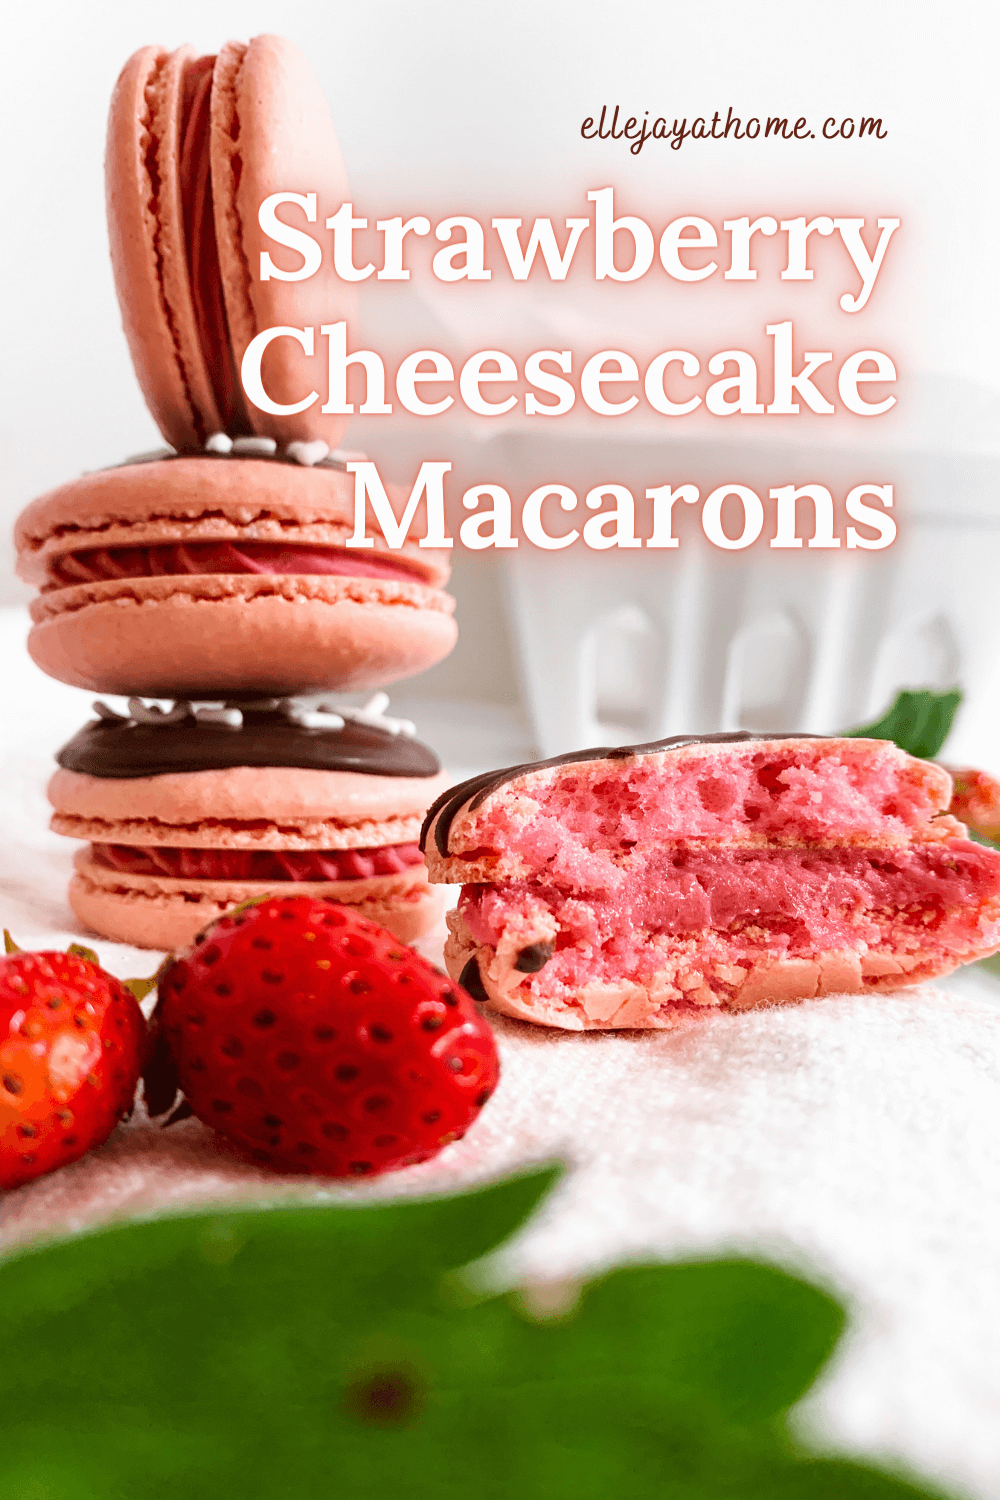 How to Make Chocolate-Covered Strawberry Cheesecake Macarons